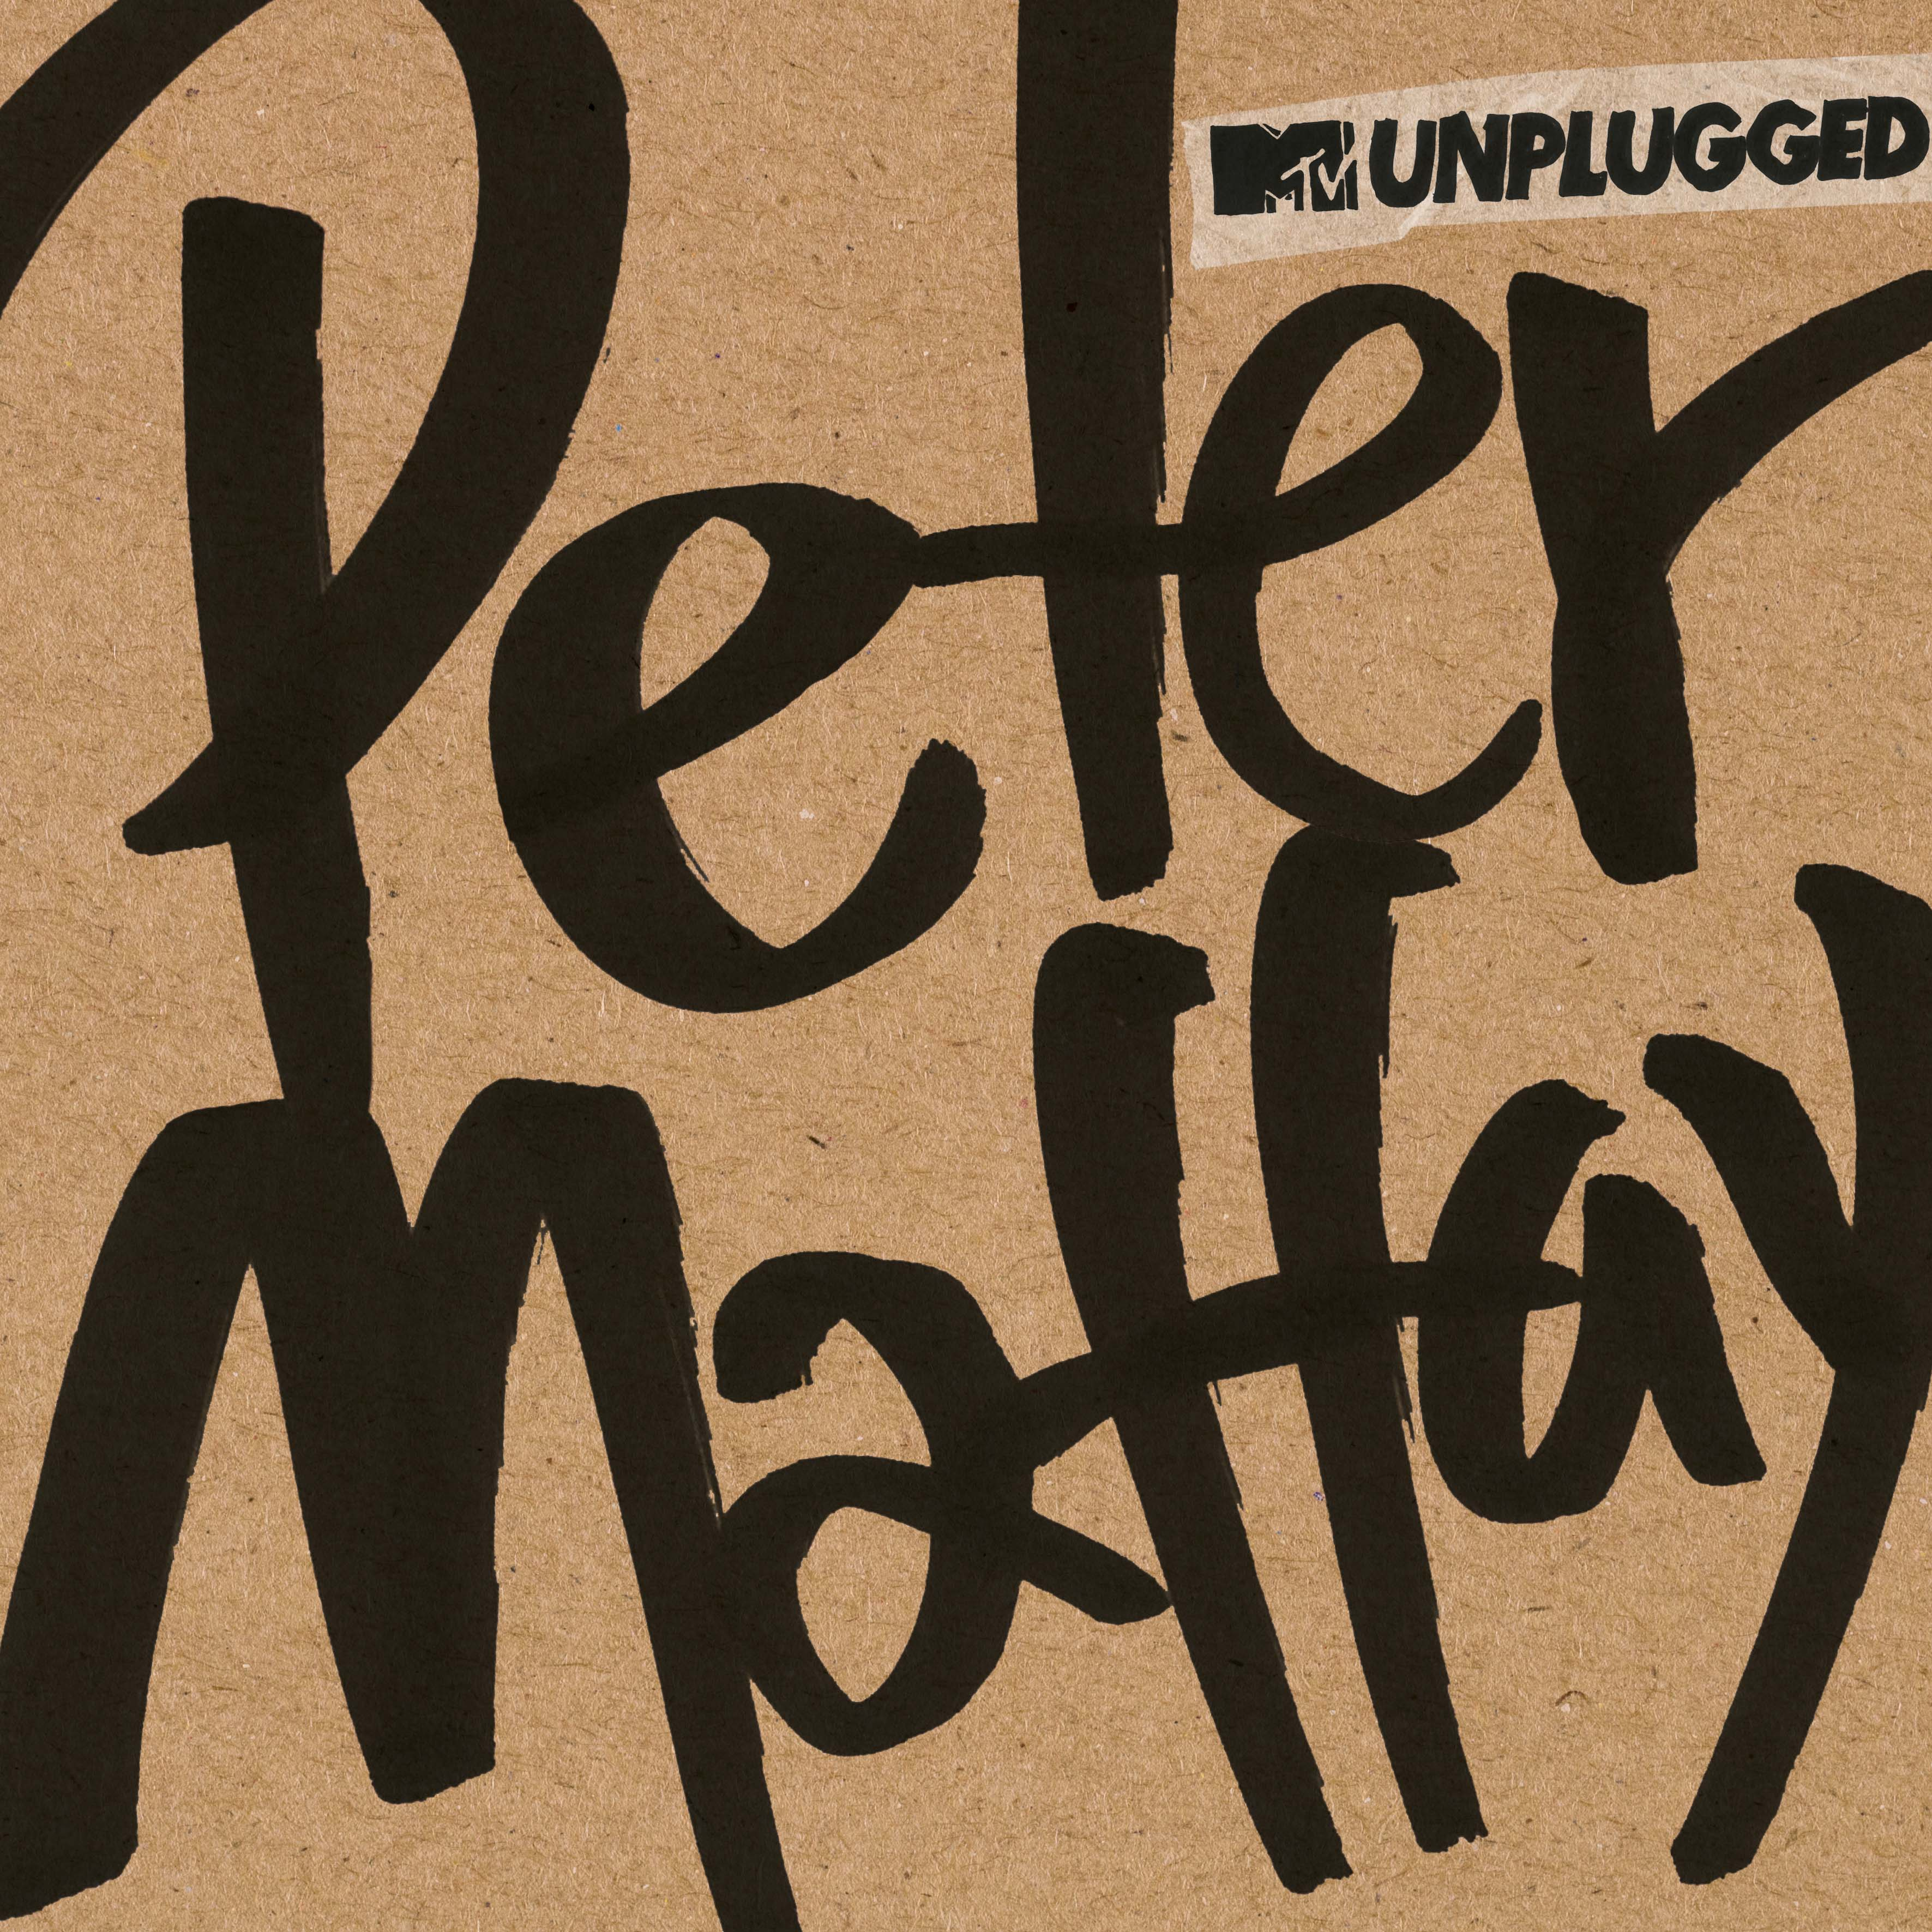 (Vinyl) - Unplugged - Peter MTV Maffay